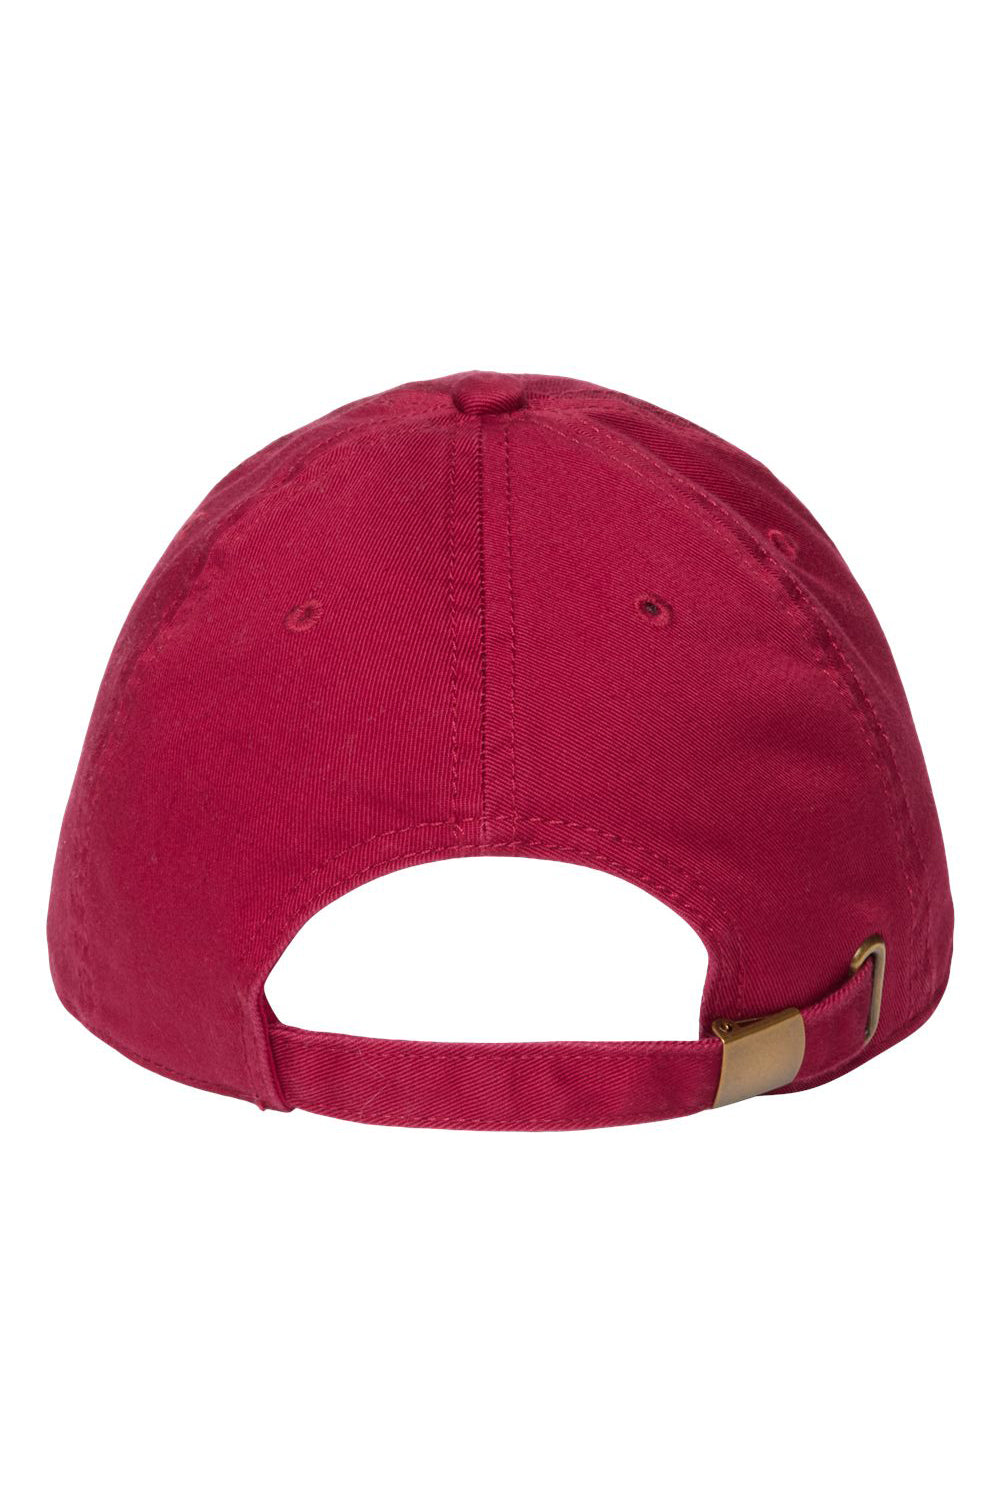 Atlantis Headwear FRASER Mens Sustainable Adjustable Dad Hat Cardinal Red Flat Back